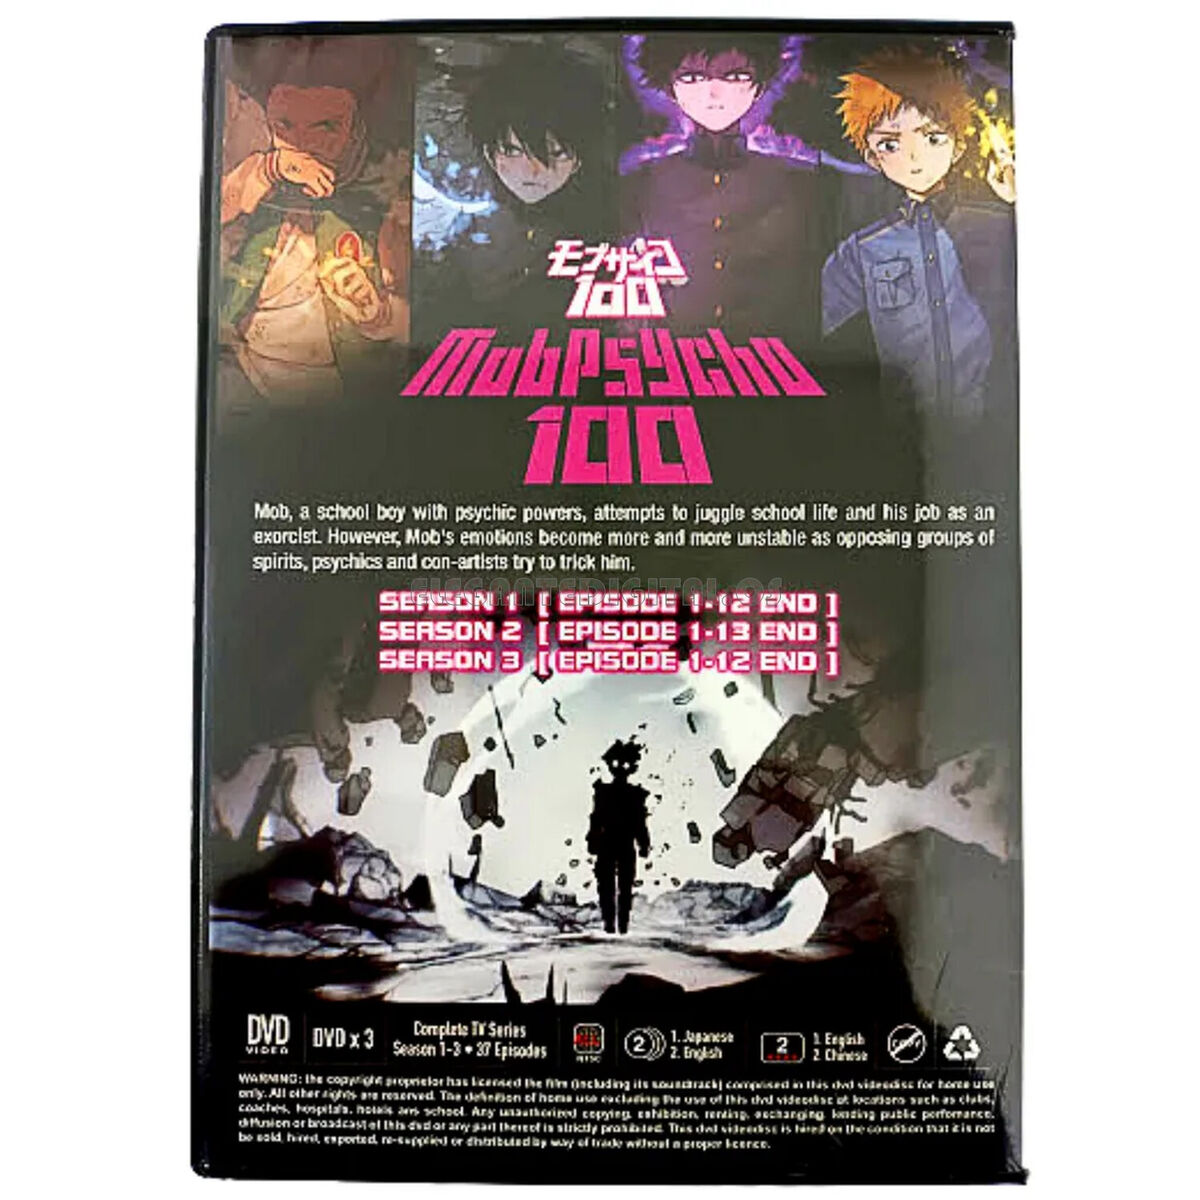 Mob Psycho 100 Season 1-3 Vol.1-37 END Complete Anime DVD [English Dubbed]